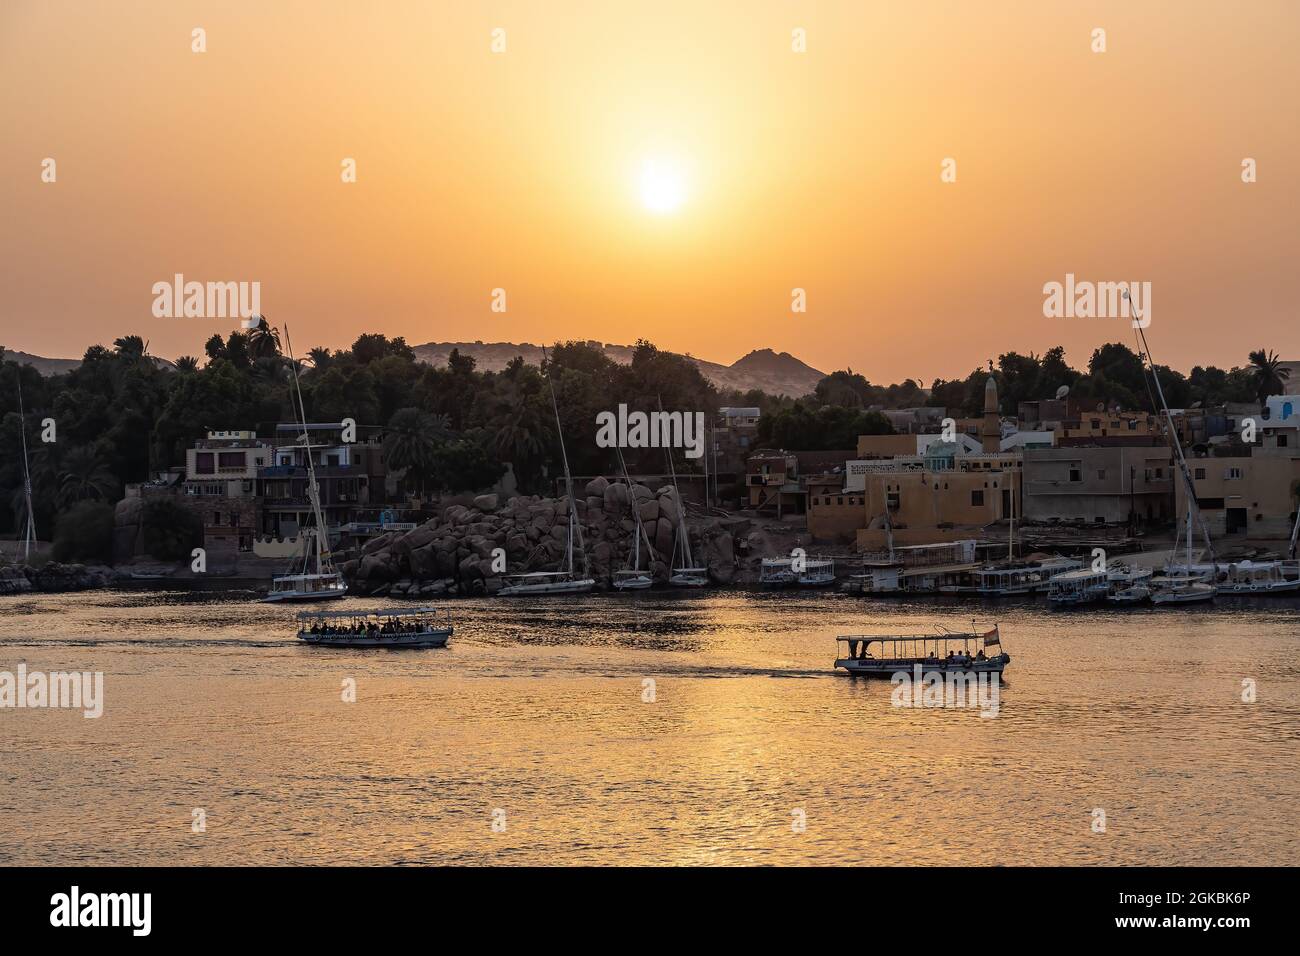 View of a beautiful orange sunset in Aswan, Egypt Stock Photo